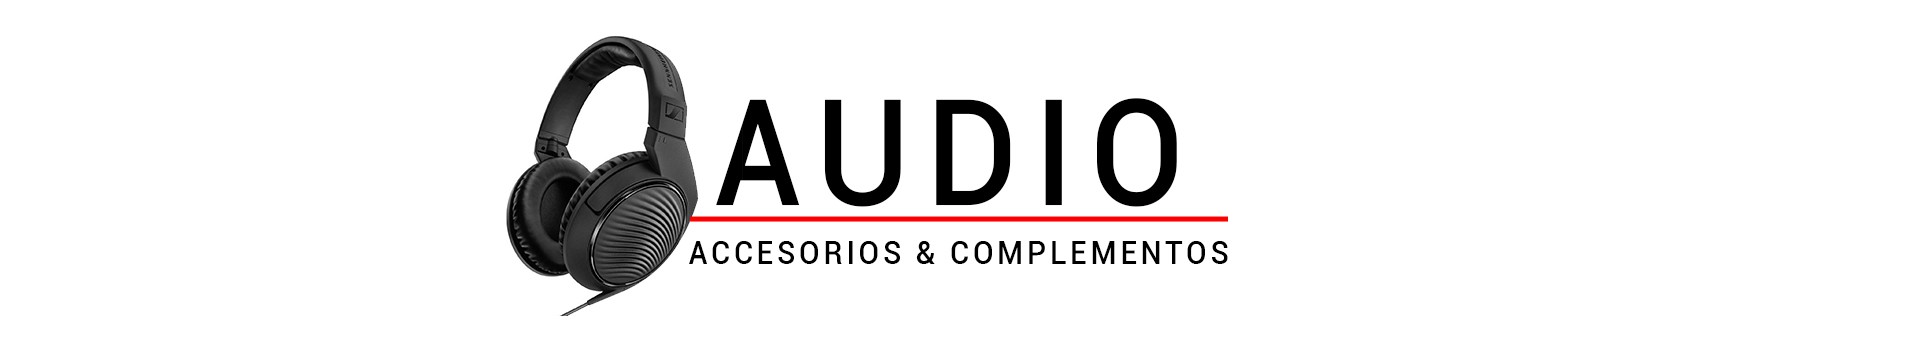 Accesorios y complementos para queipos de audio profesional